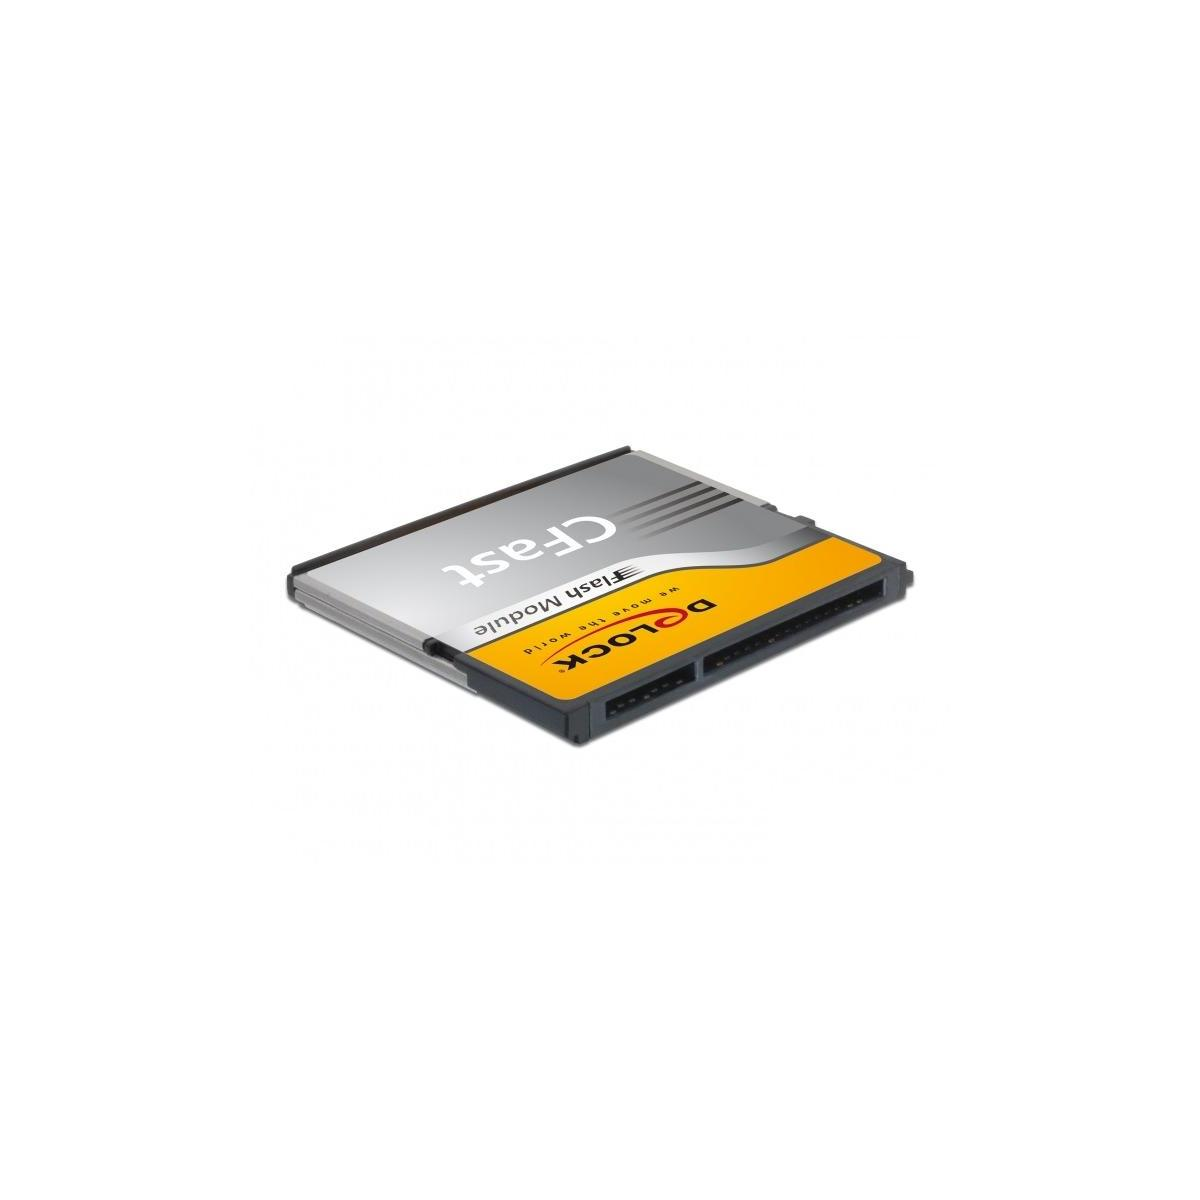 DELOCK 54538, CFast Speicherkarte, 8 310 MB/s 2.0 GB